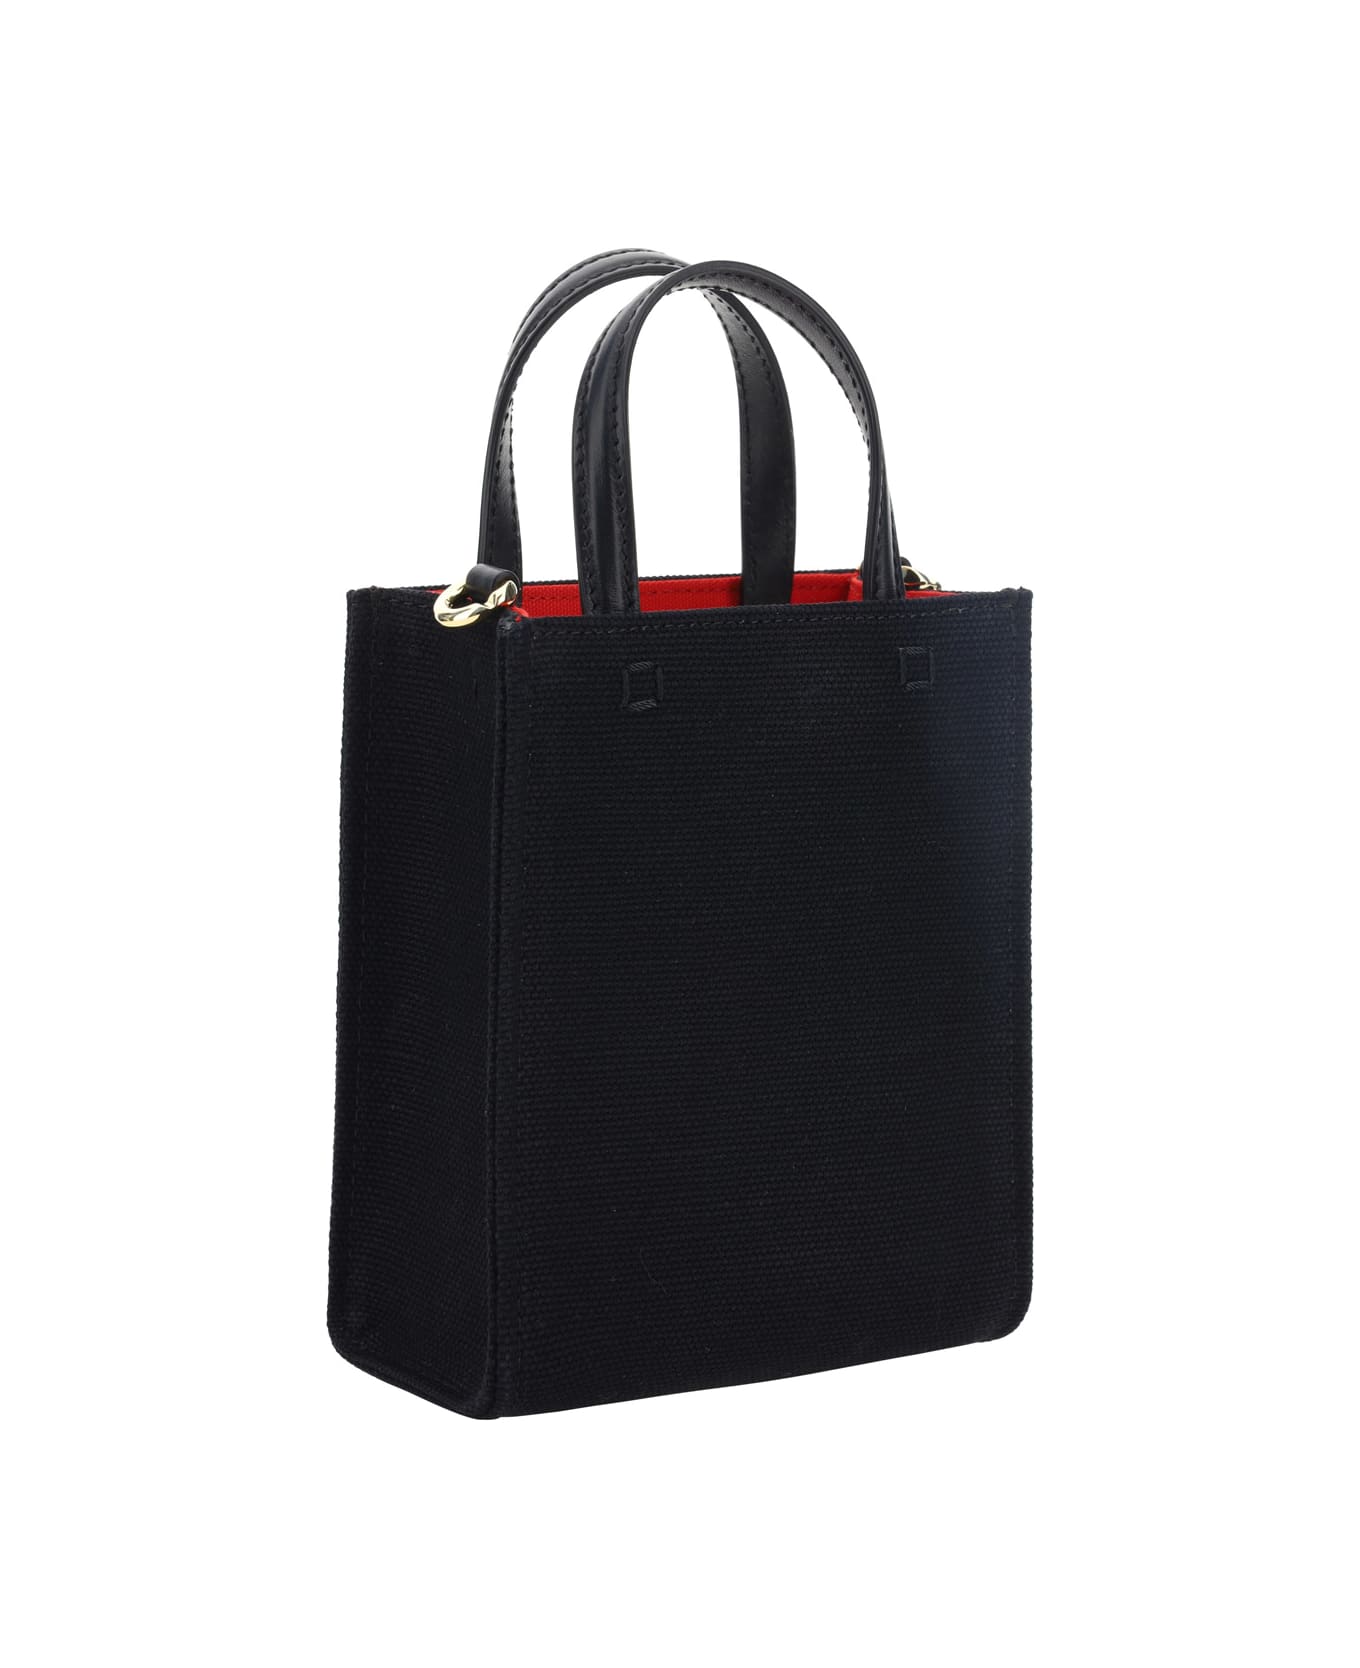 Givenchy G-tote Mini Hand Bag - Black